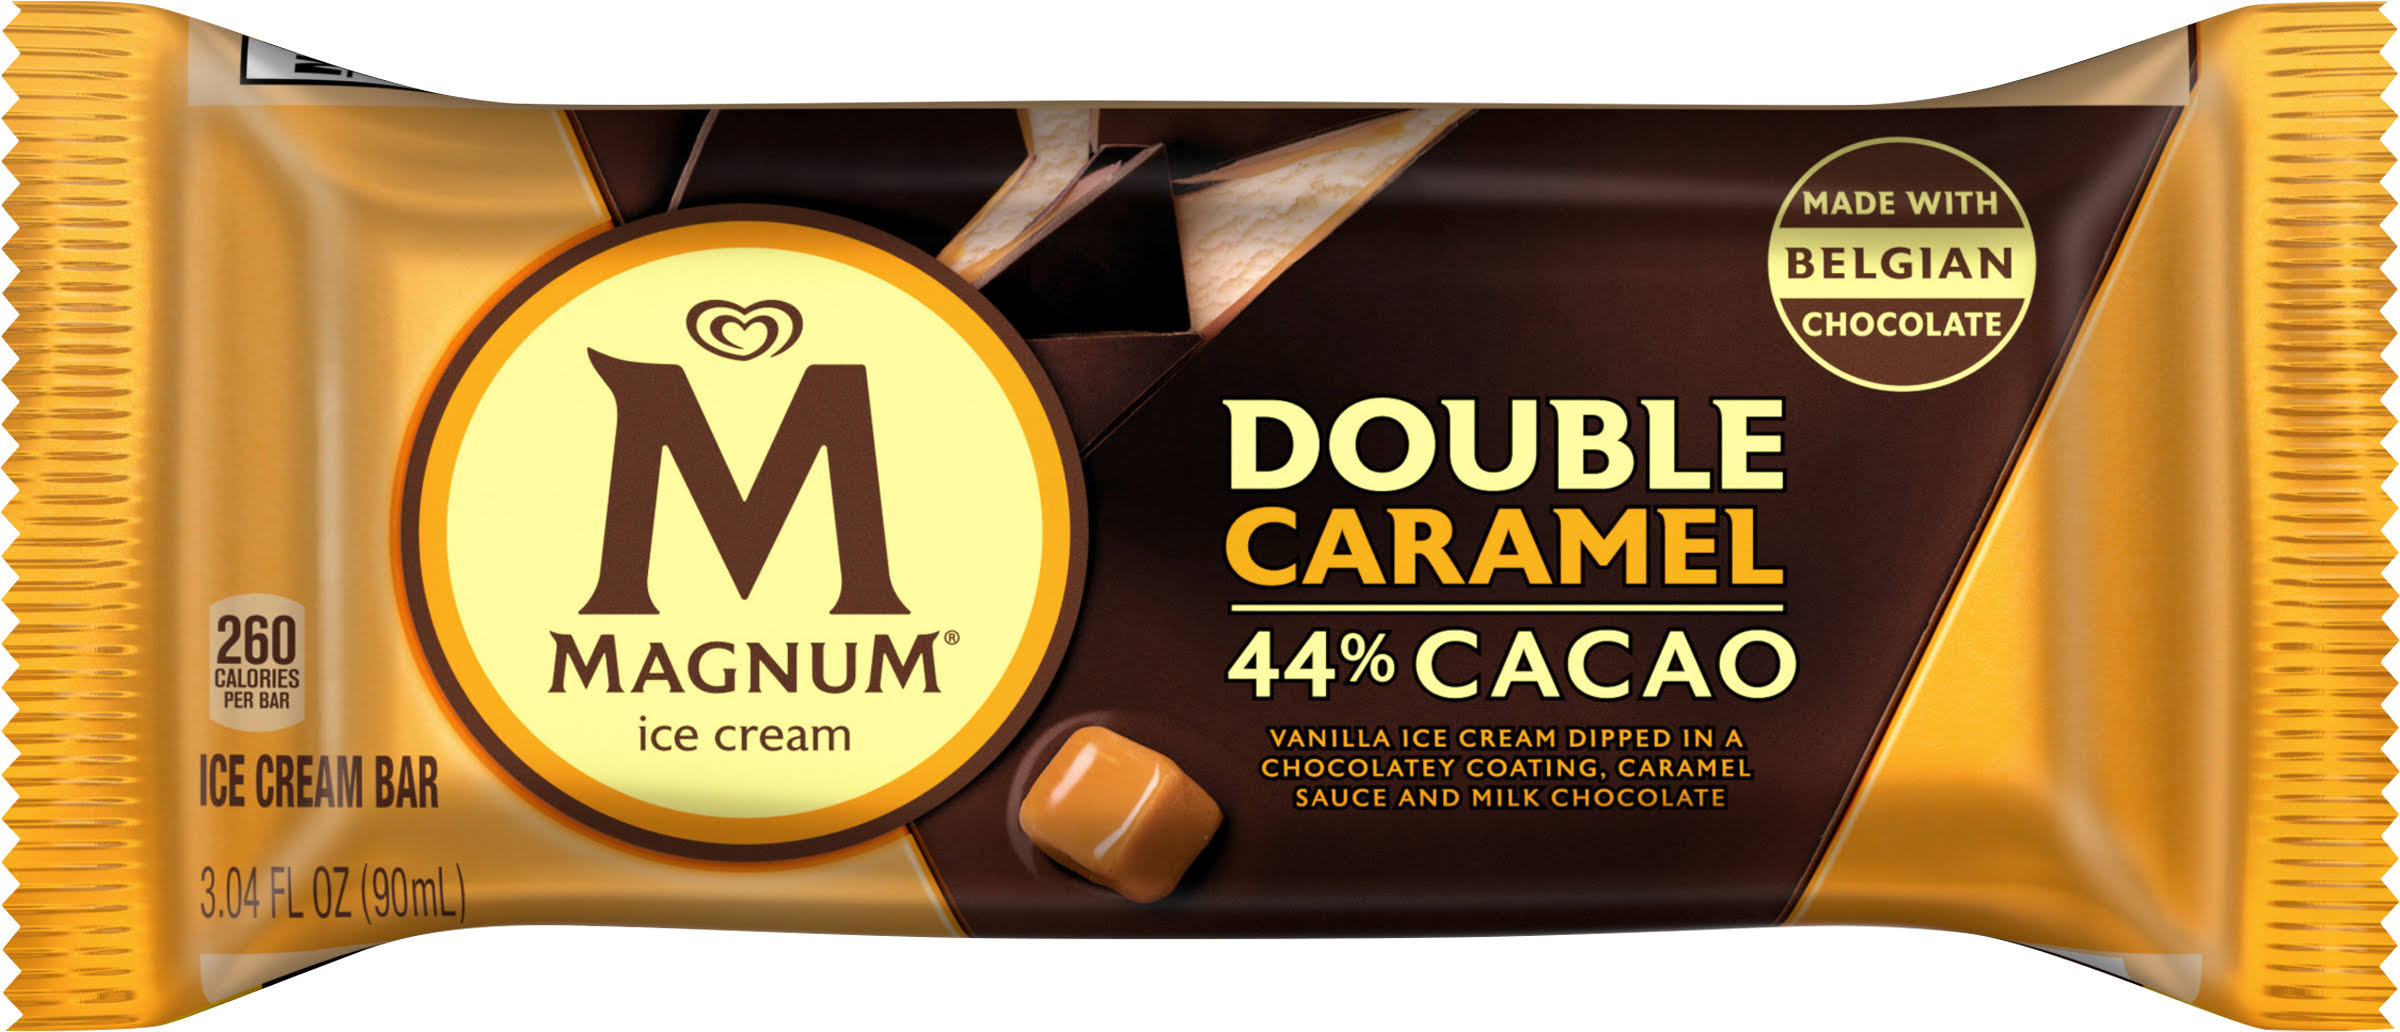 Magnum Ice Cream Bar - Double Caramel